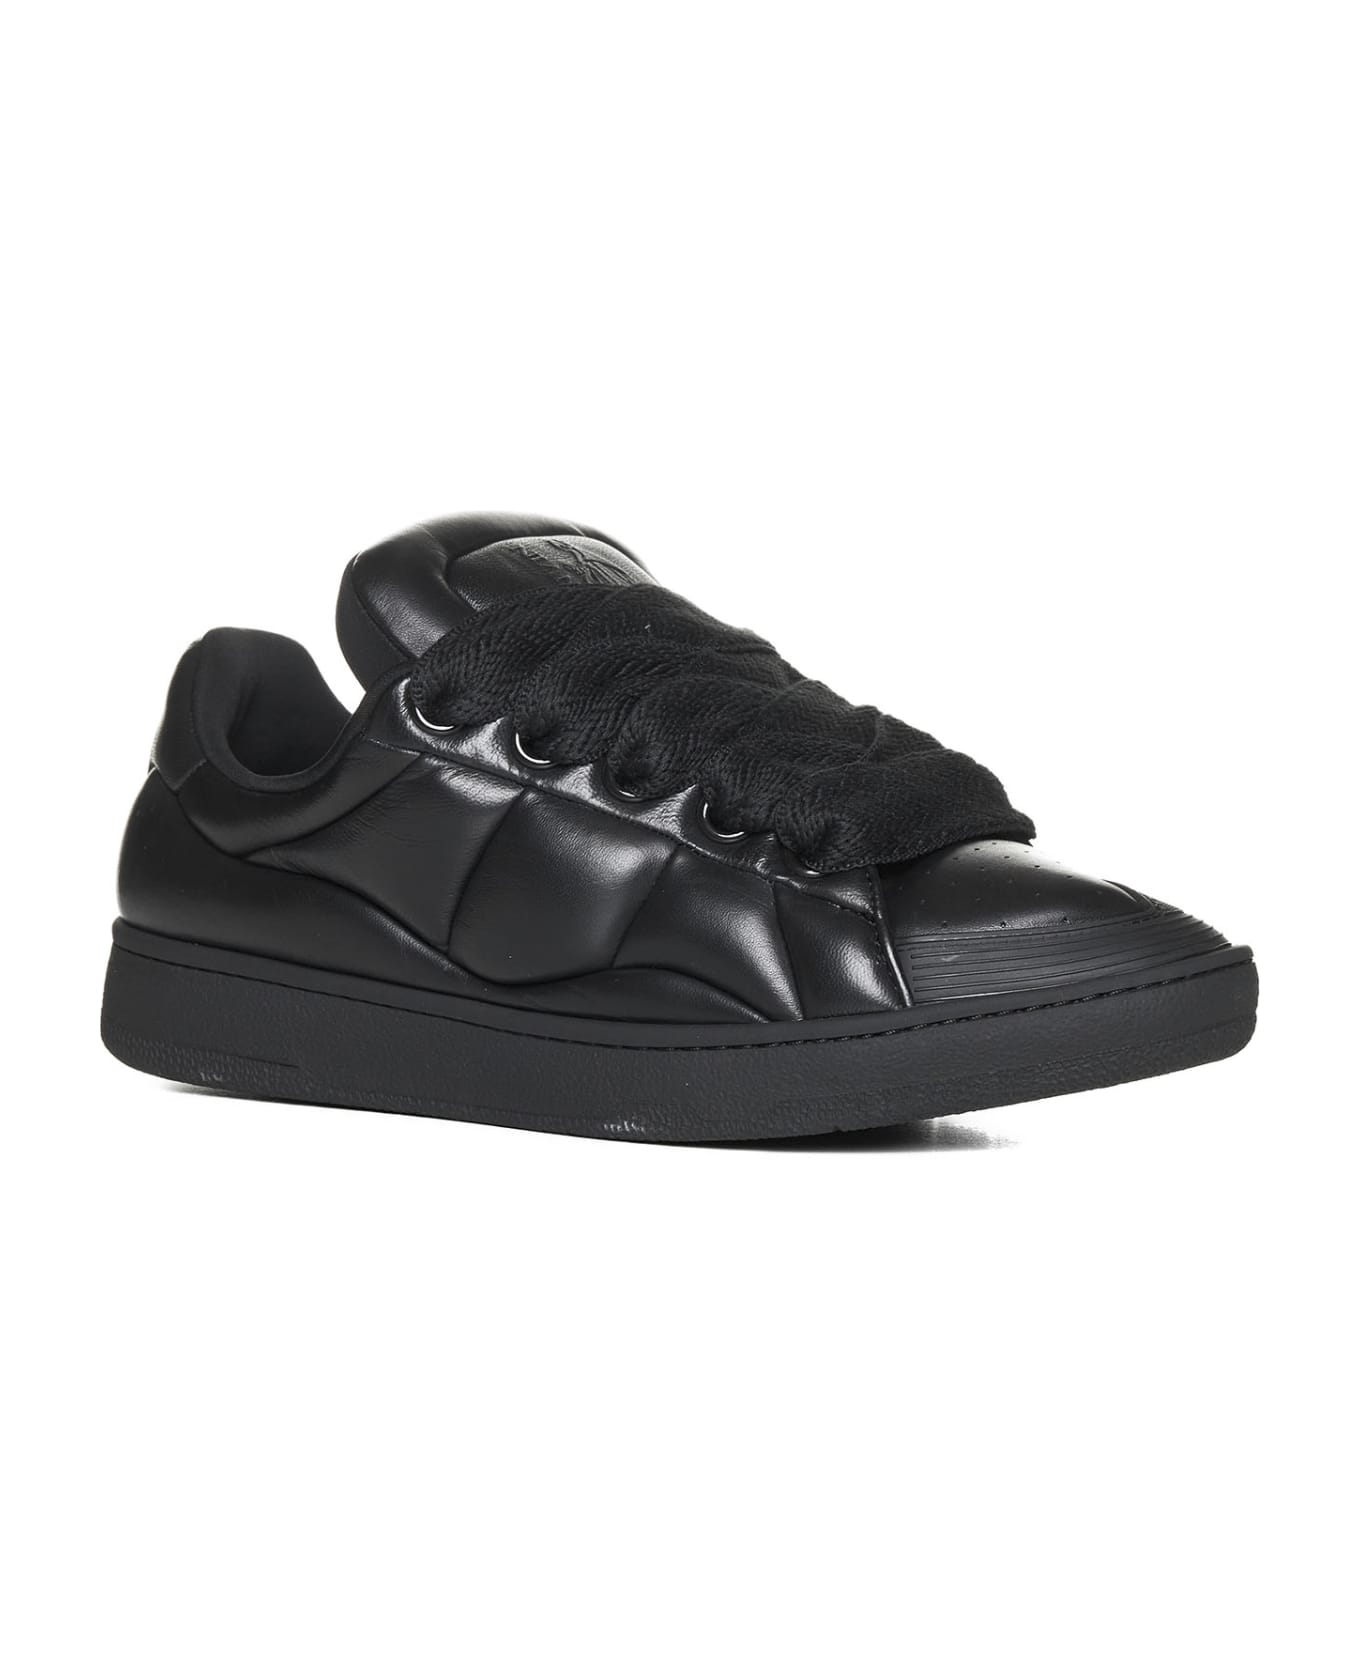 Lanvin Sneakers - Monarch/black